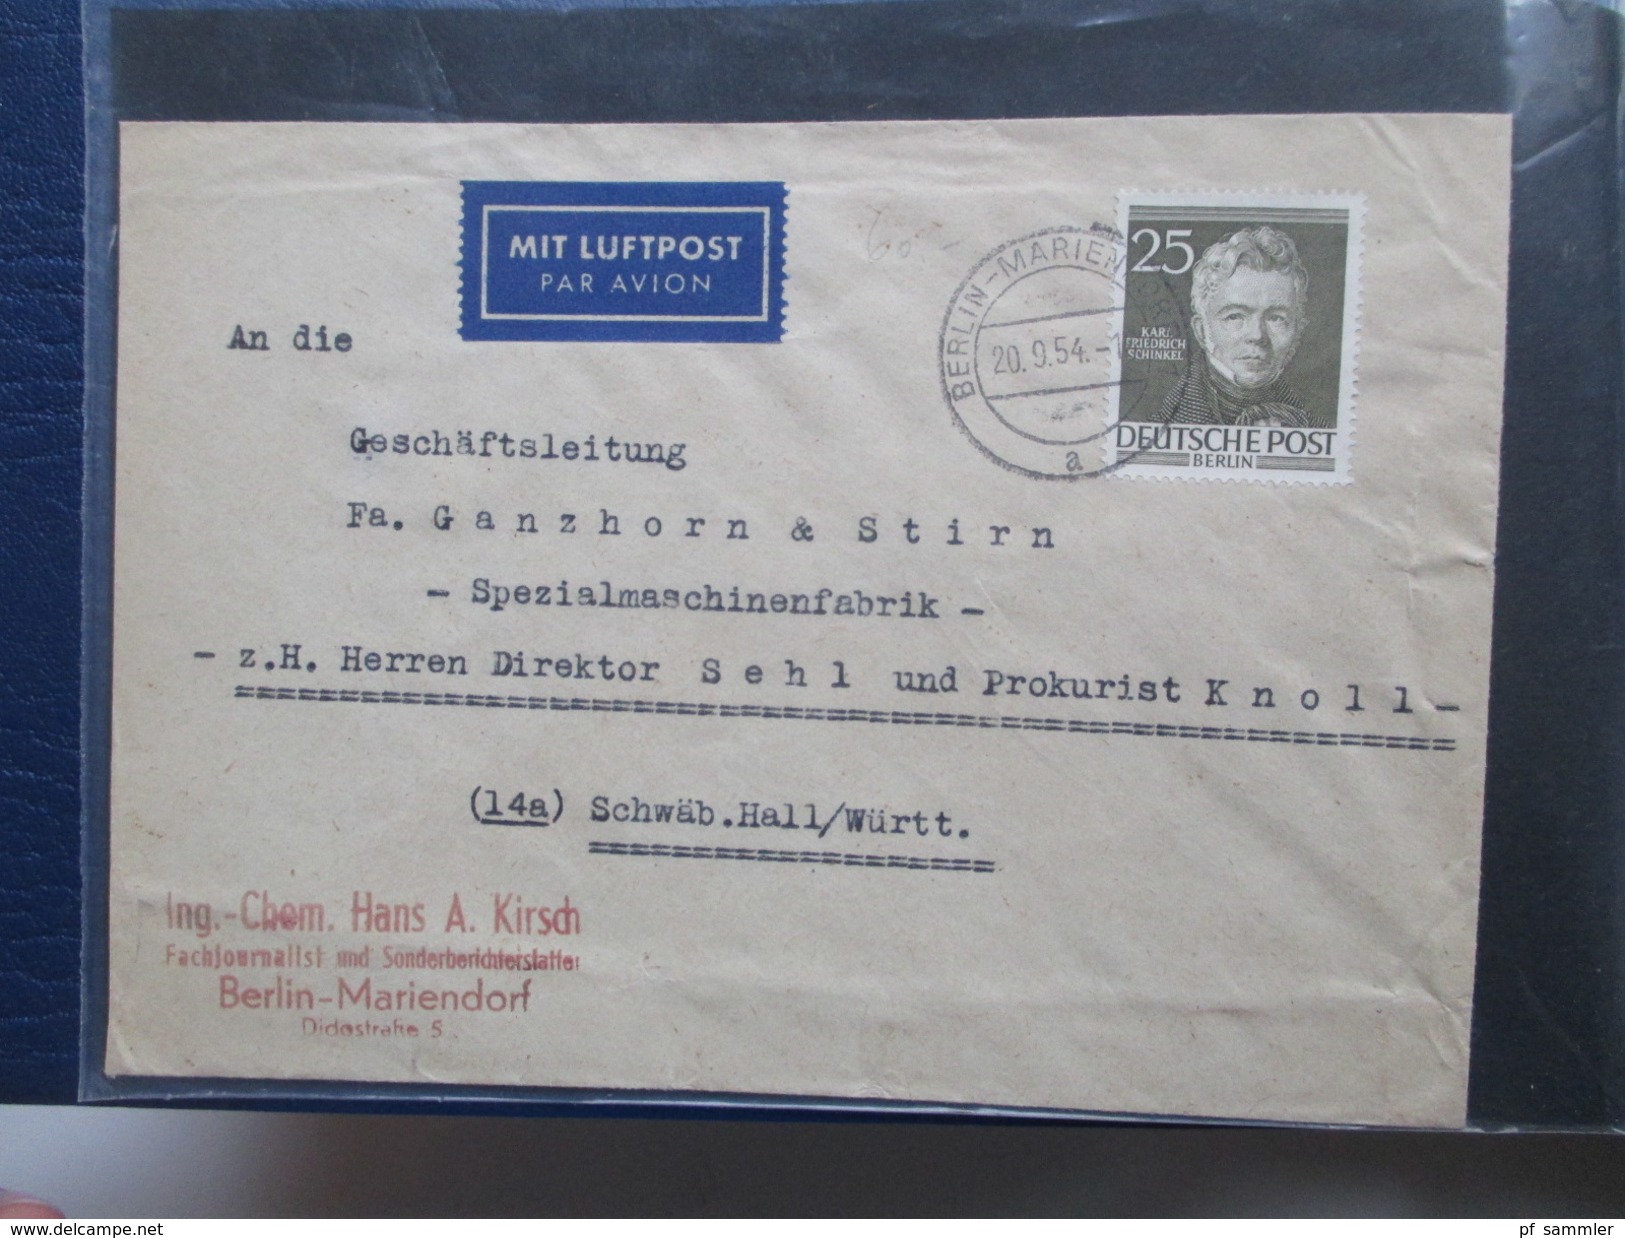 Berlin Belegesammlung 100 Briefe. Bedarf / FDC 1953 - 1972. Interessante Stücke / Stöberposten! Hoher Katalogwert!! - Colecciones (en álbumes)